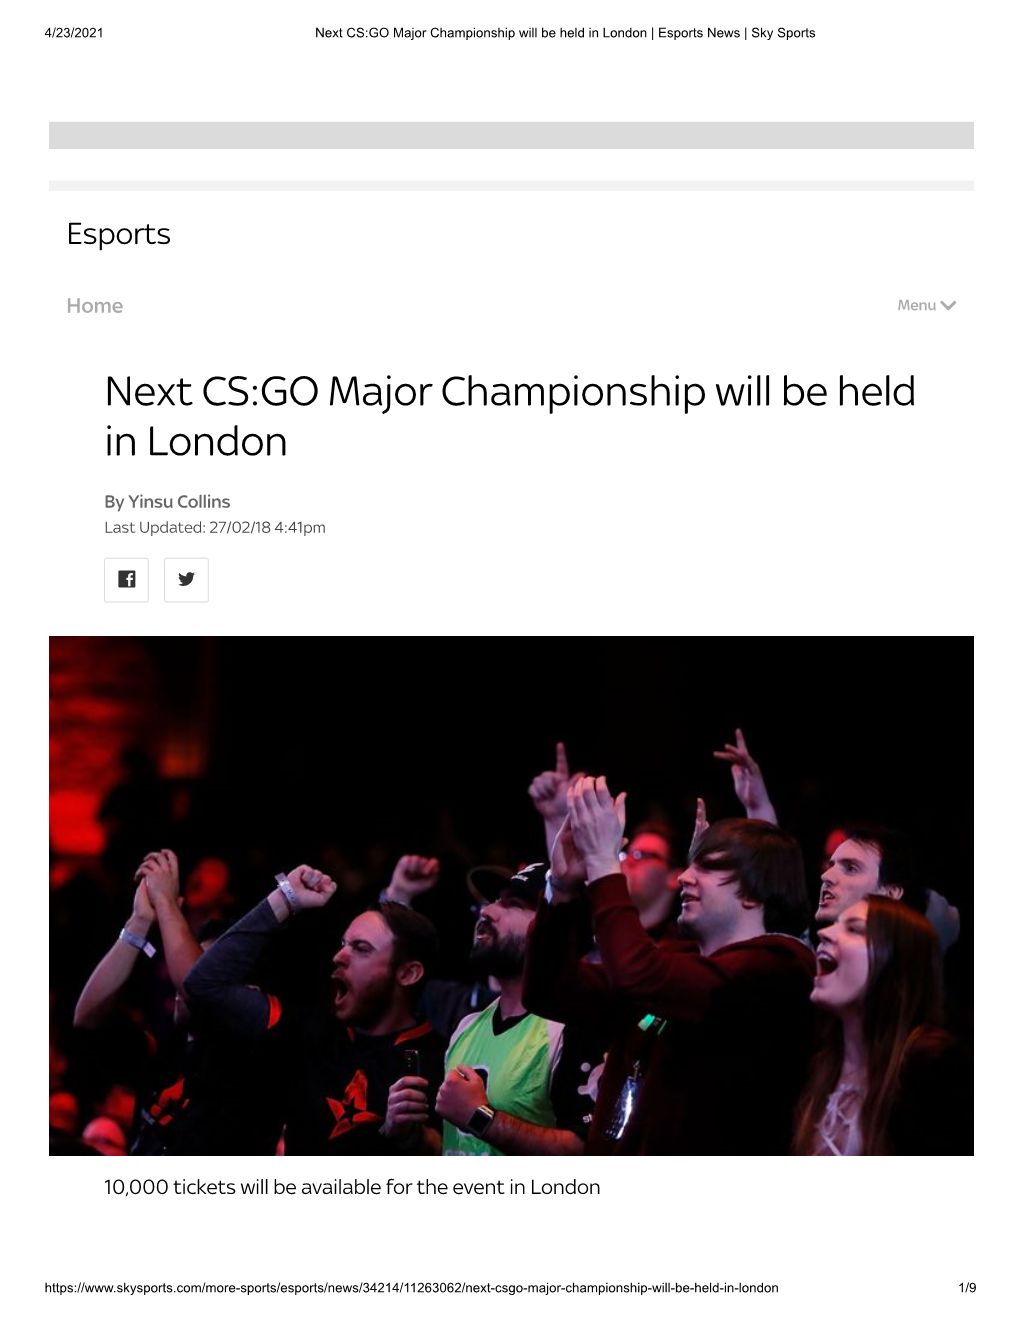 Next CS:GO Major Championship Will Be Held in London | Esports News | Sky Sports